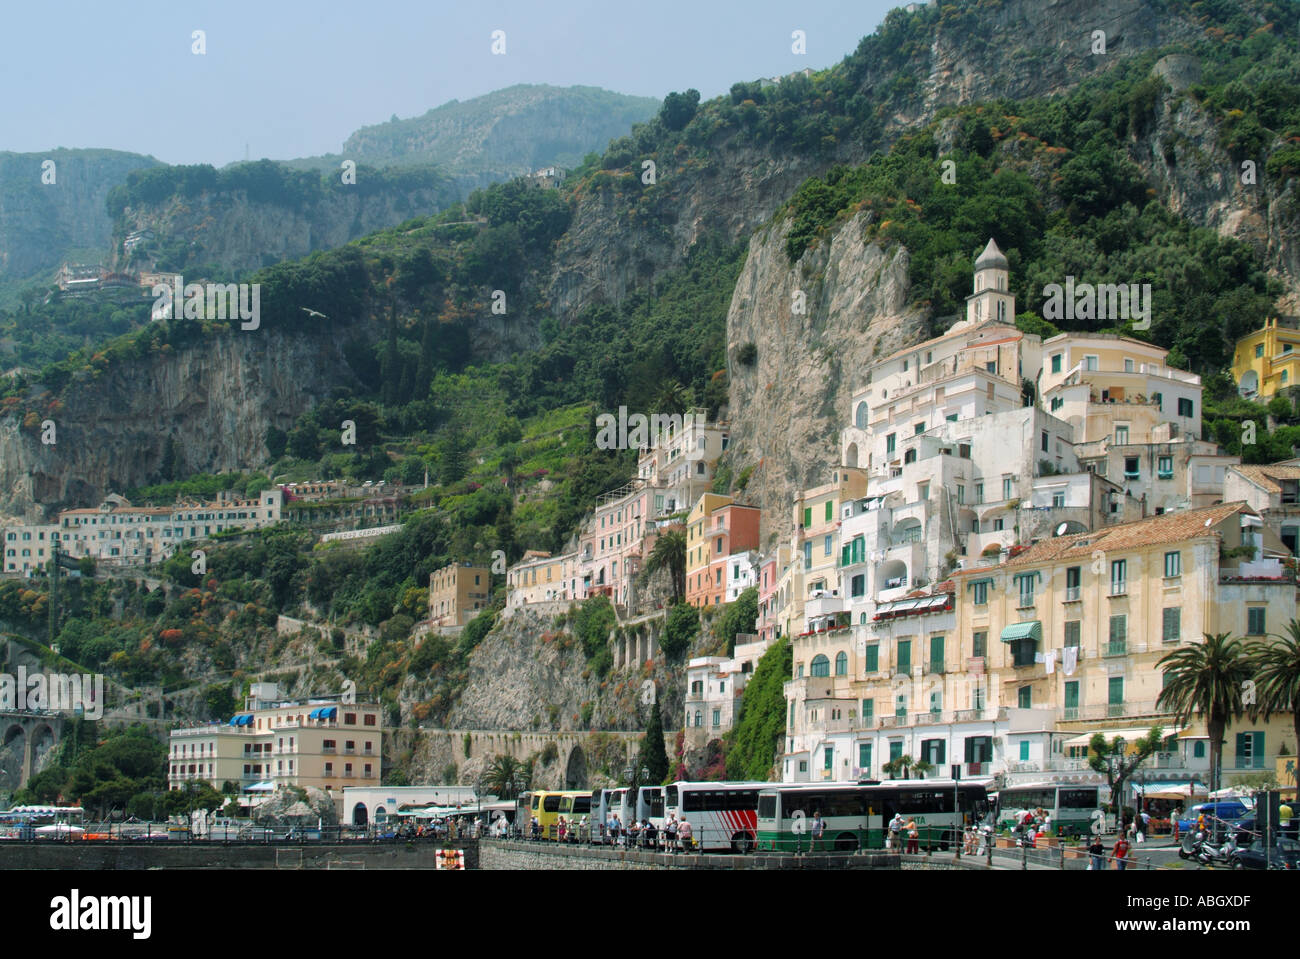 Amalfi town coastal cliff edge setting major waterside holiday tourist ...